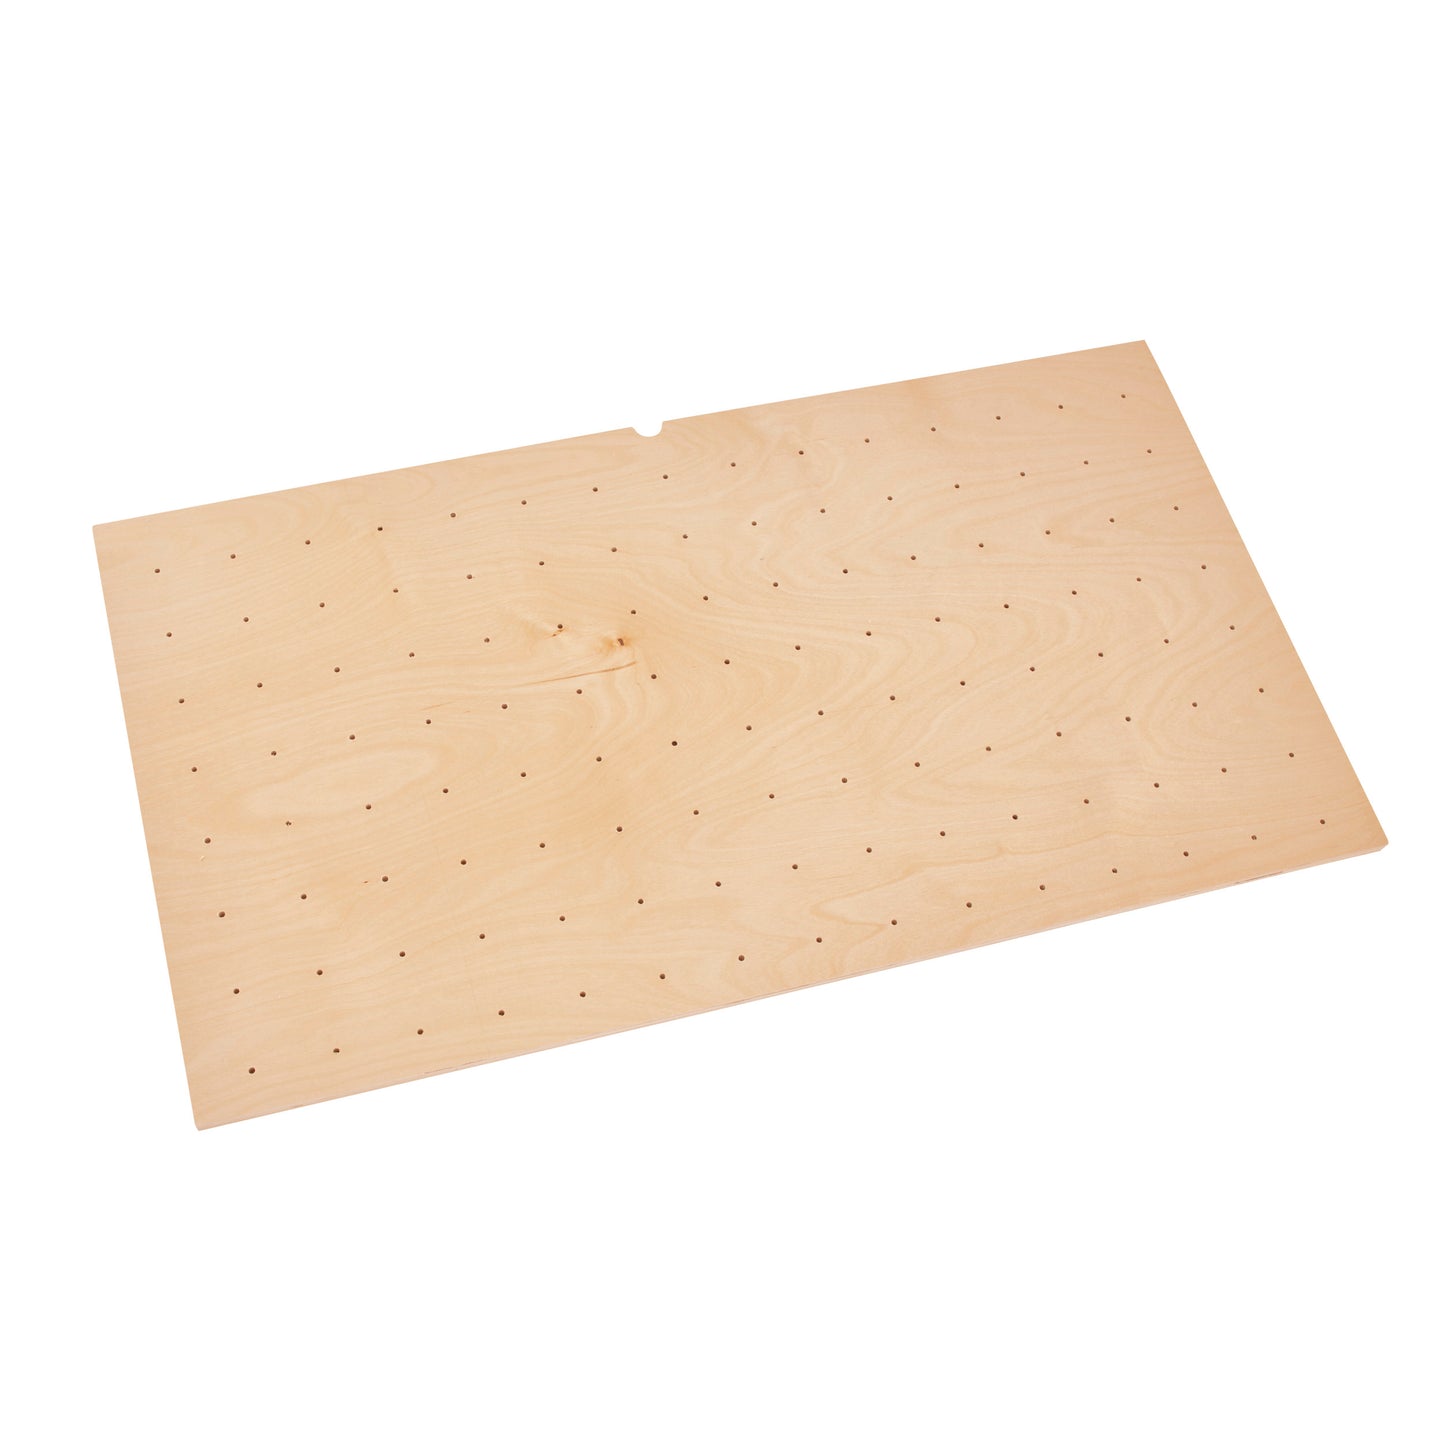 Rev-A-Shelf / 4DPB-3921 / Wood Trim-to-Fit Drawer Peg Board Insert Only